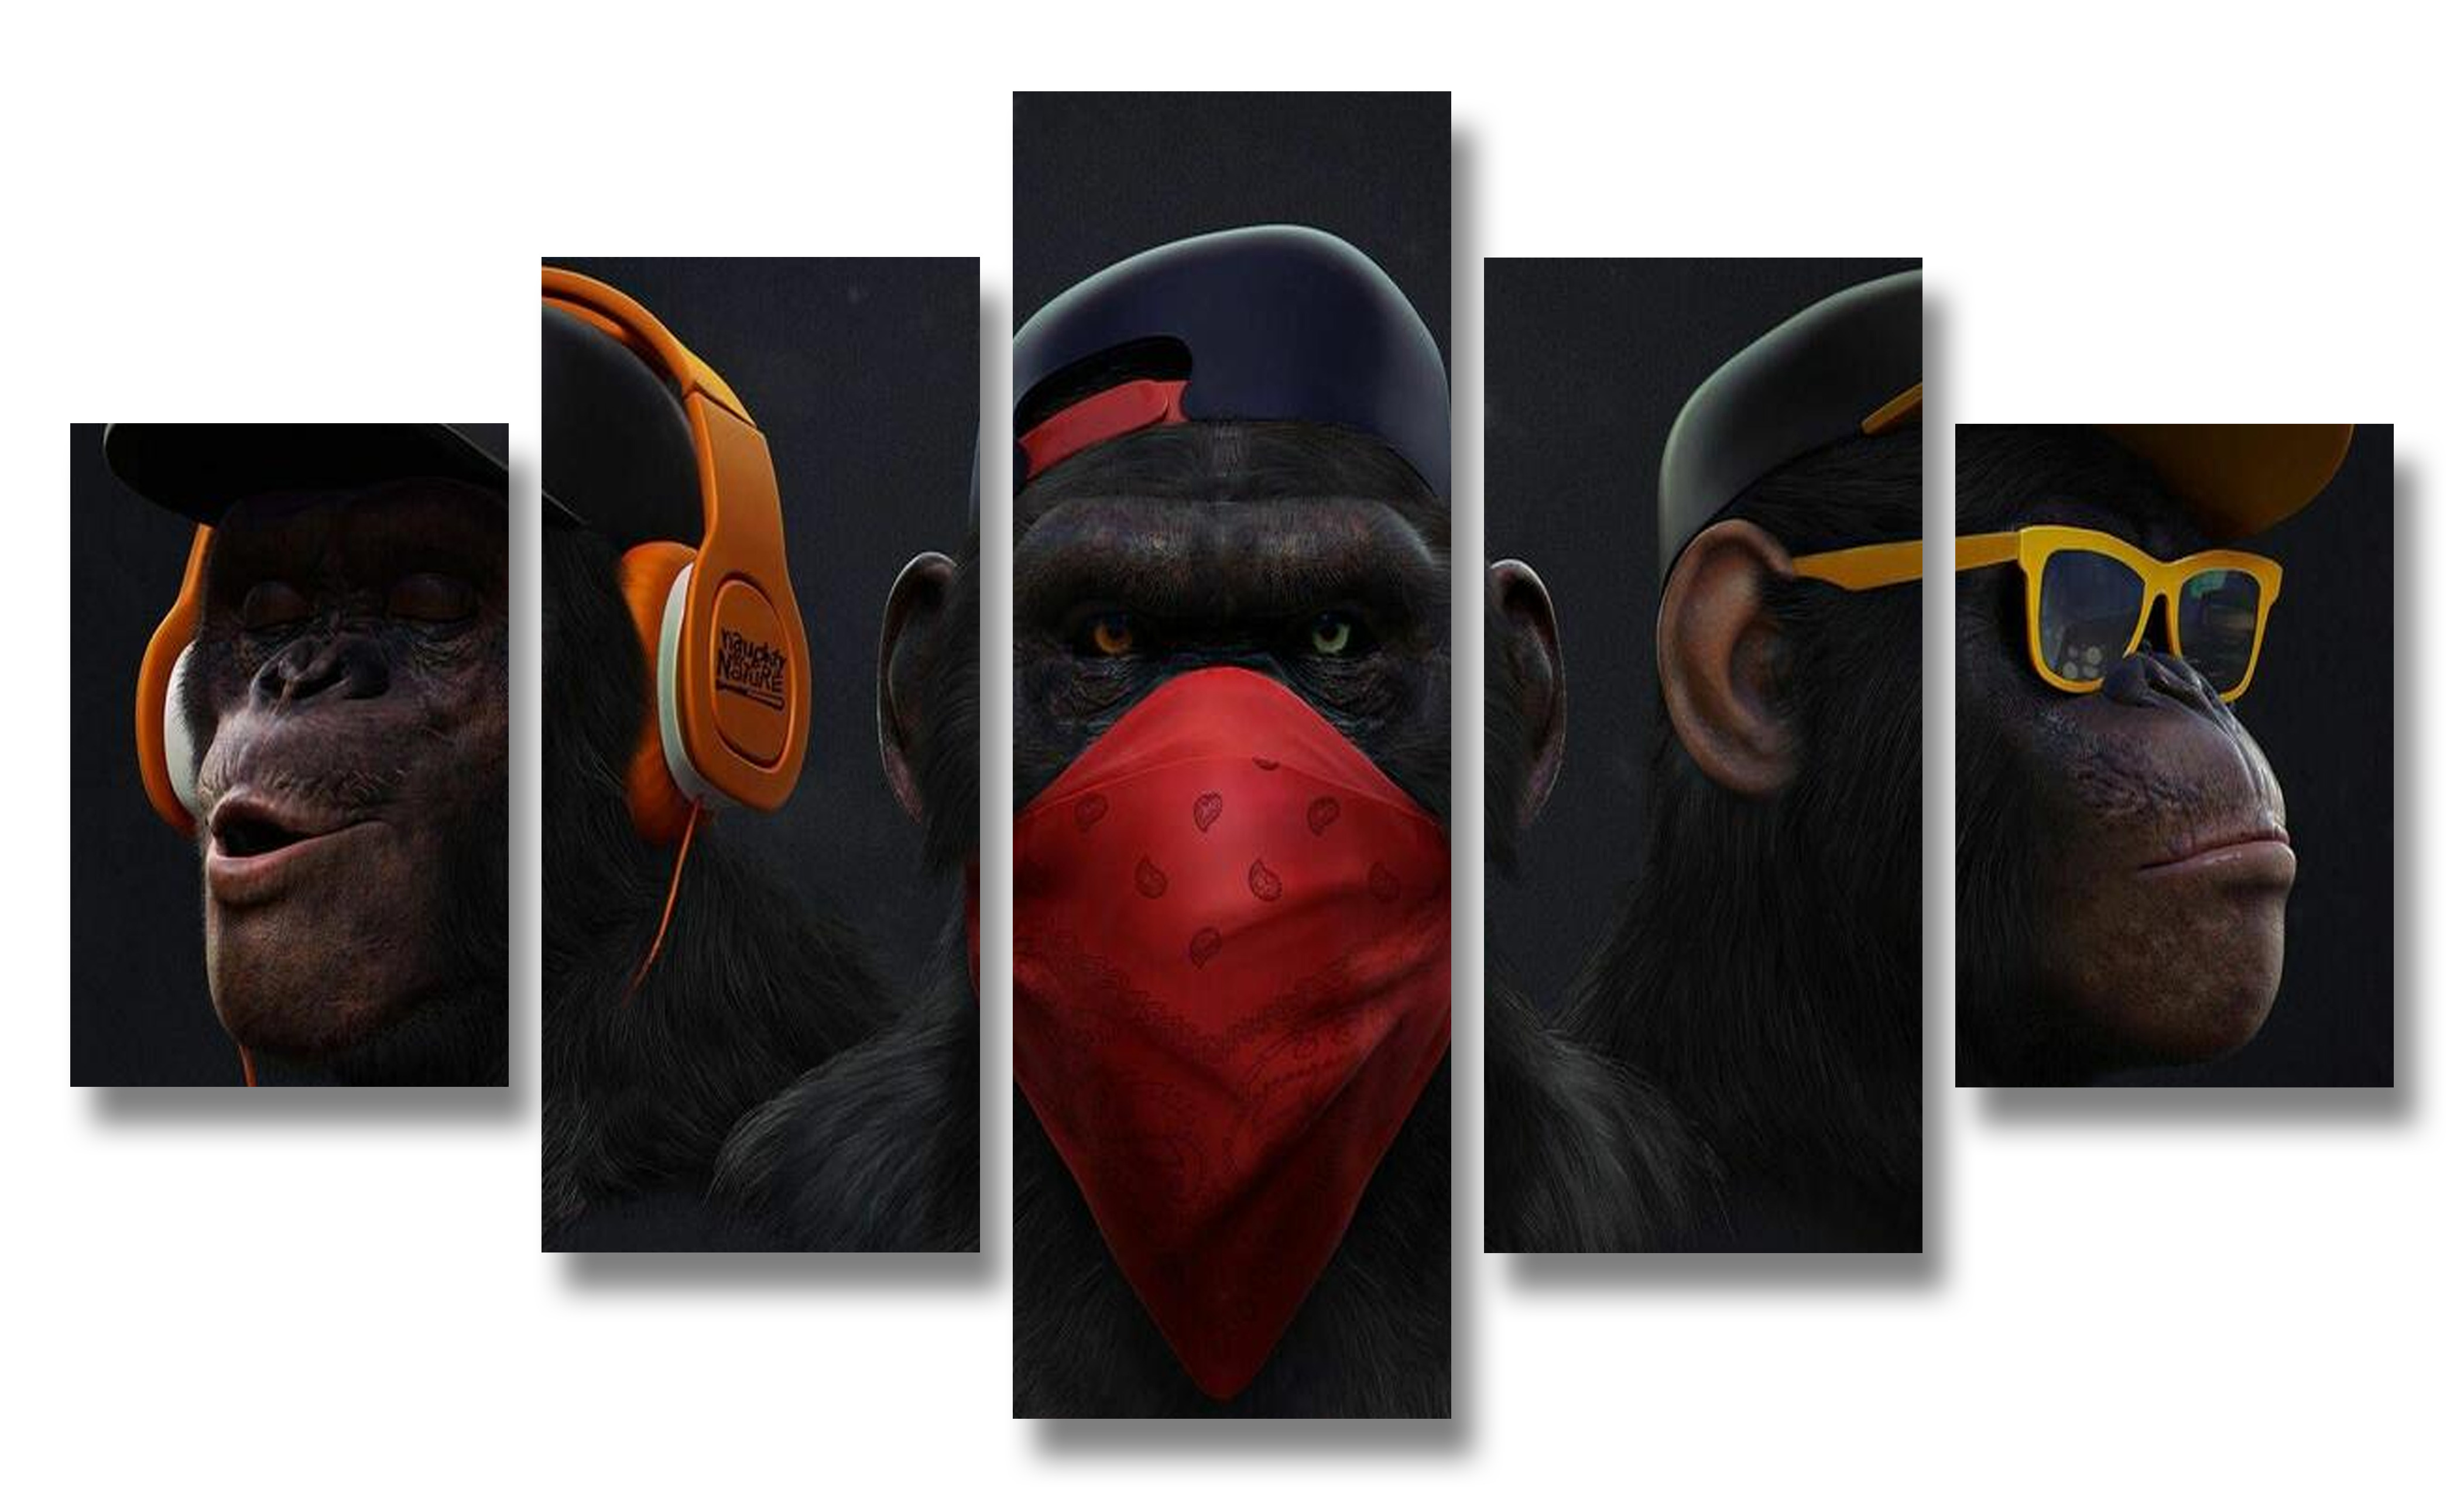 Модульная картина три обезьяны